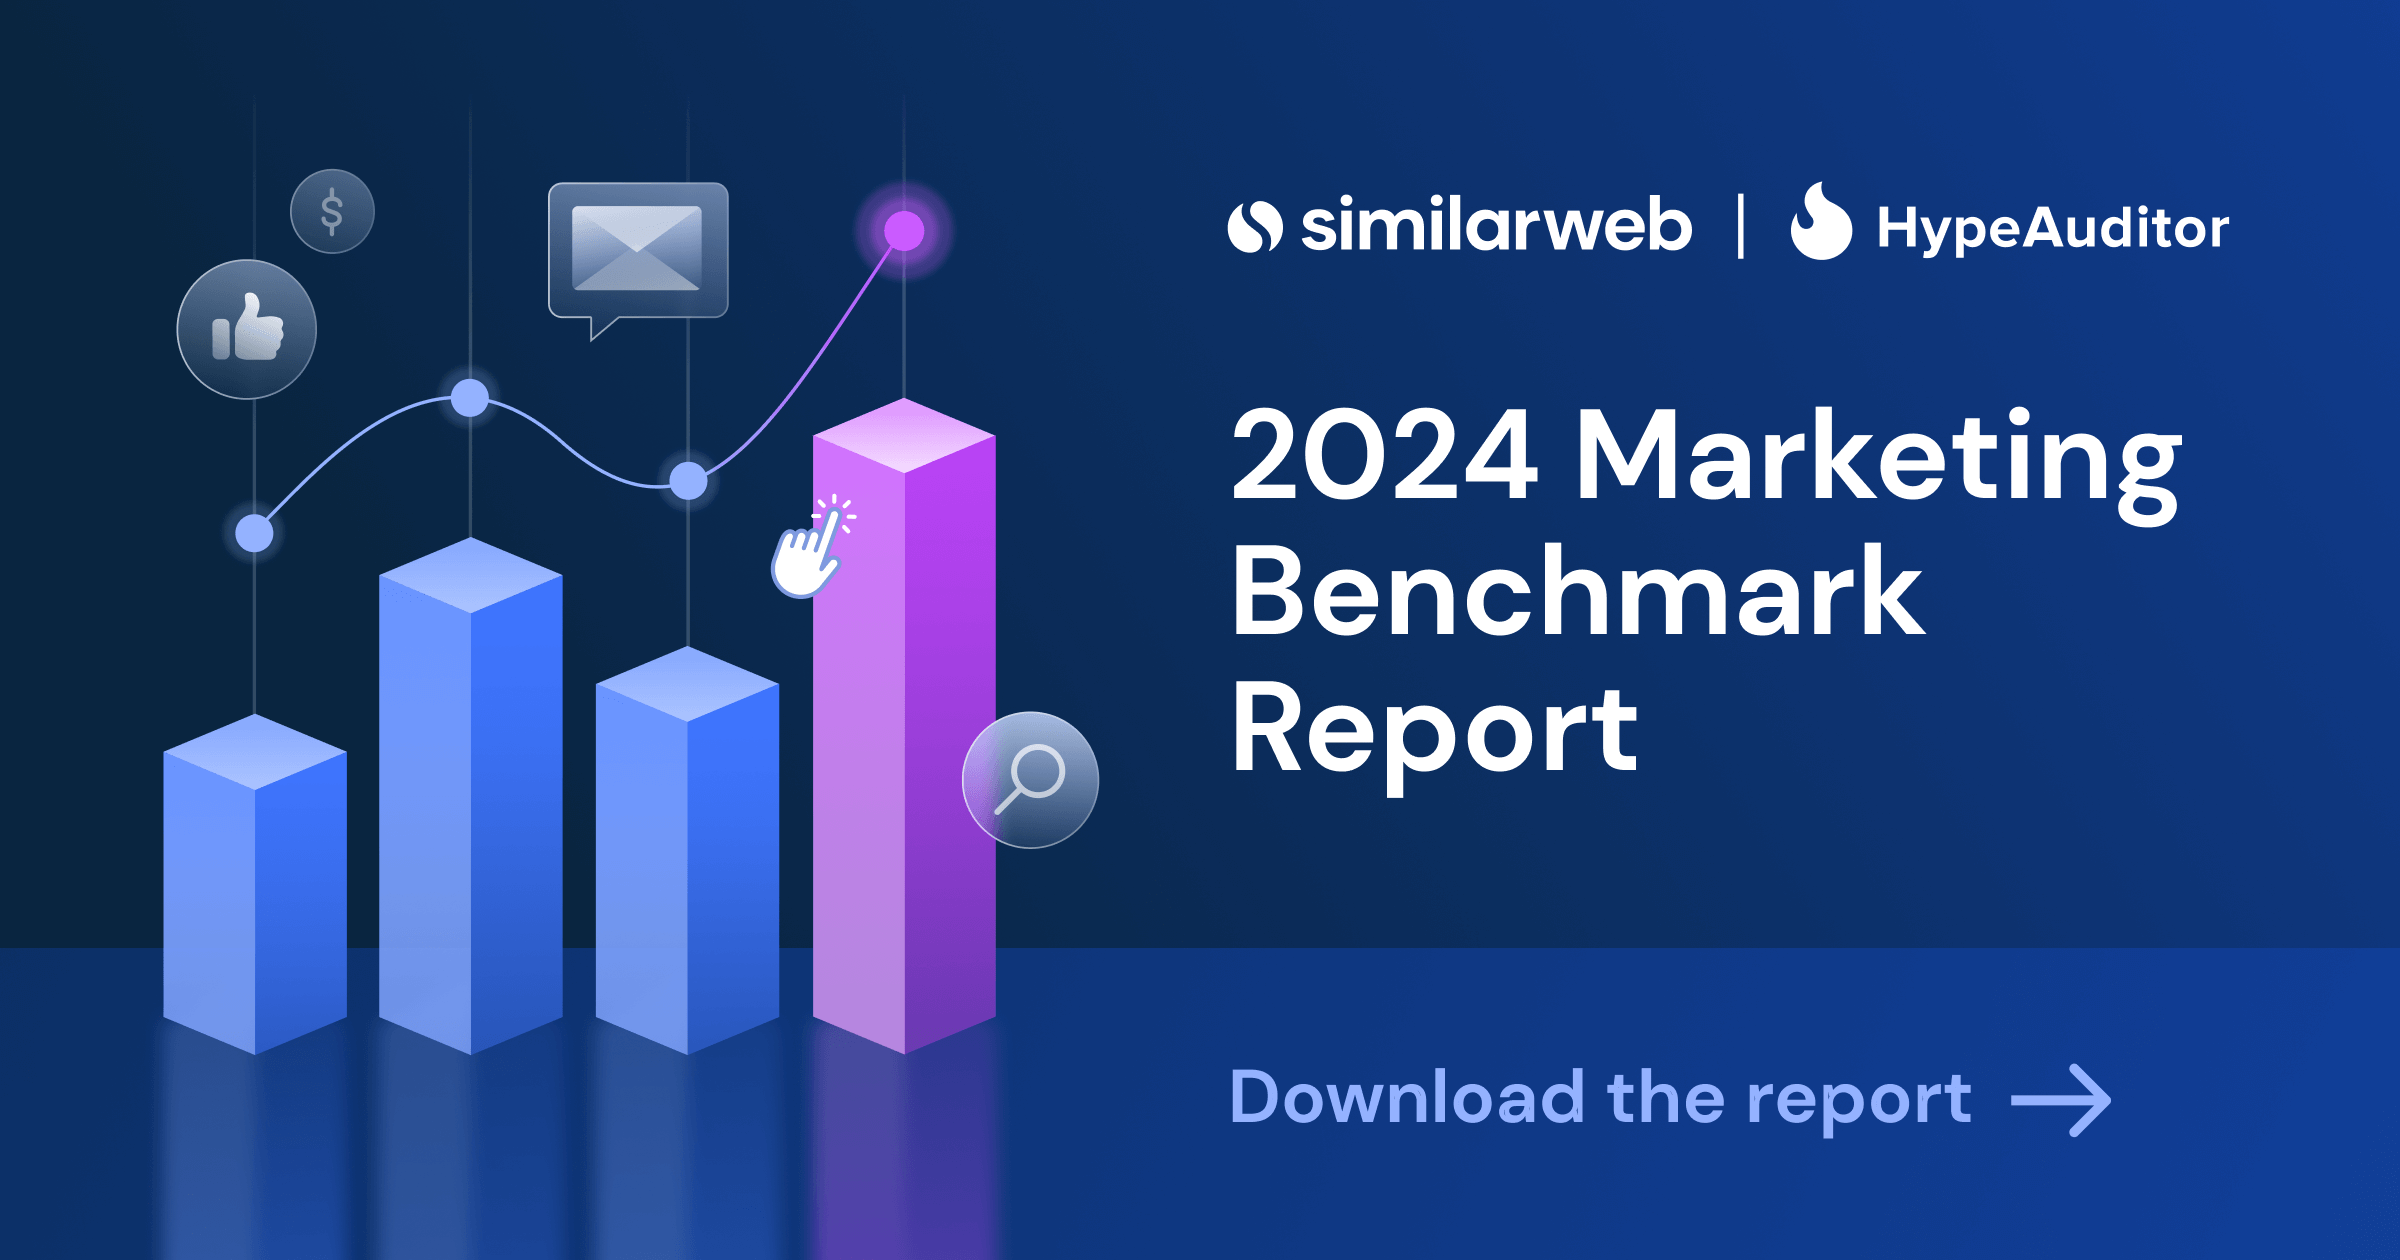 The 2024 Marketing Benchmark Report